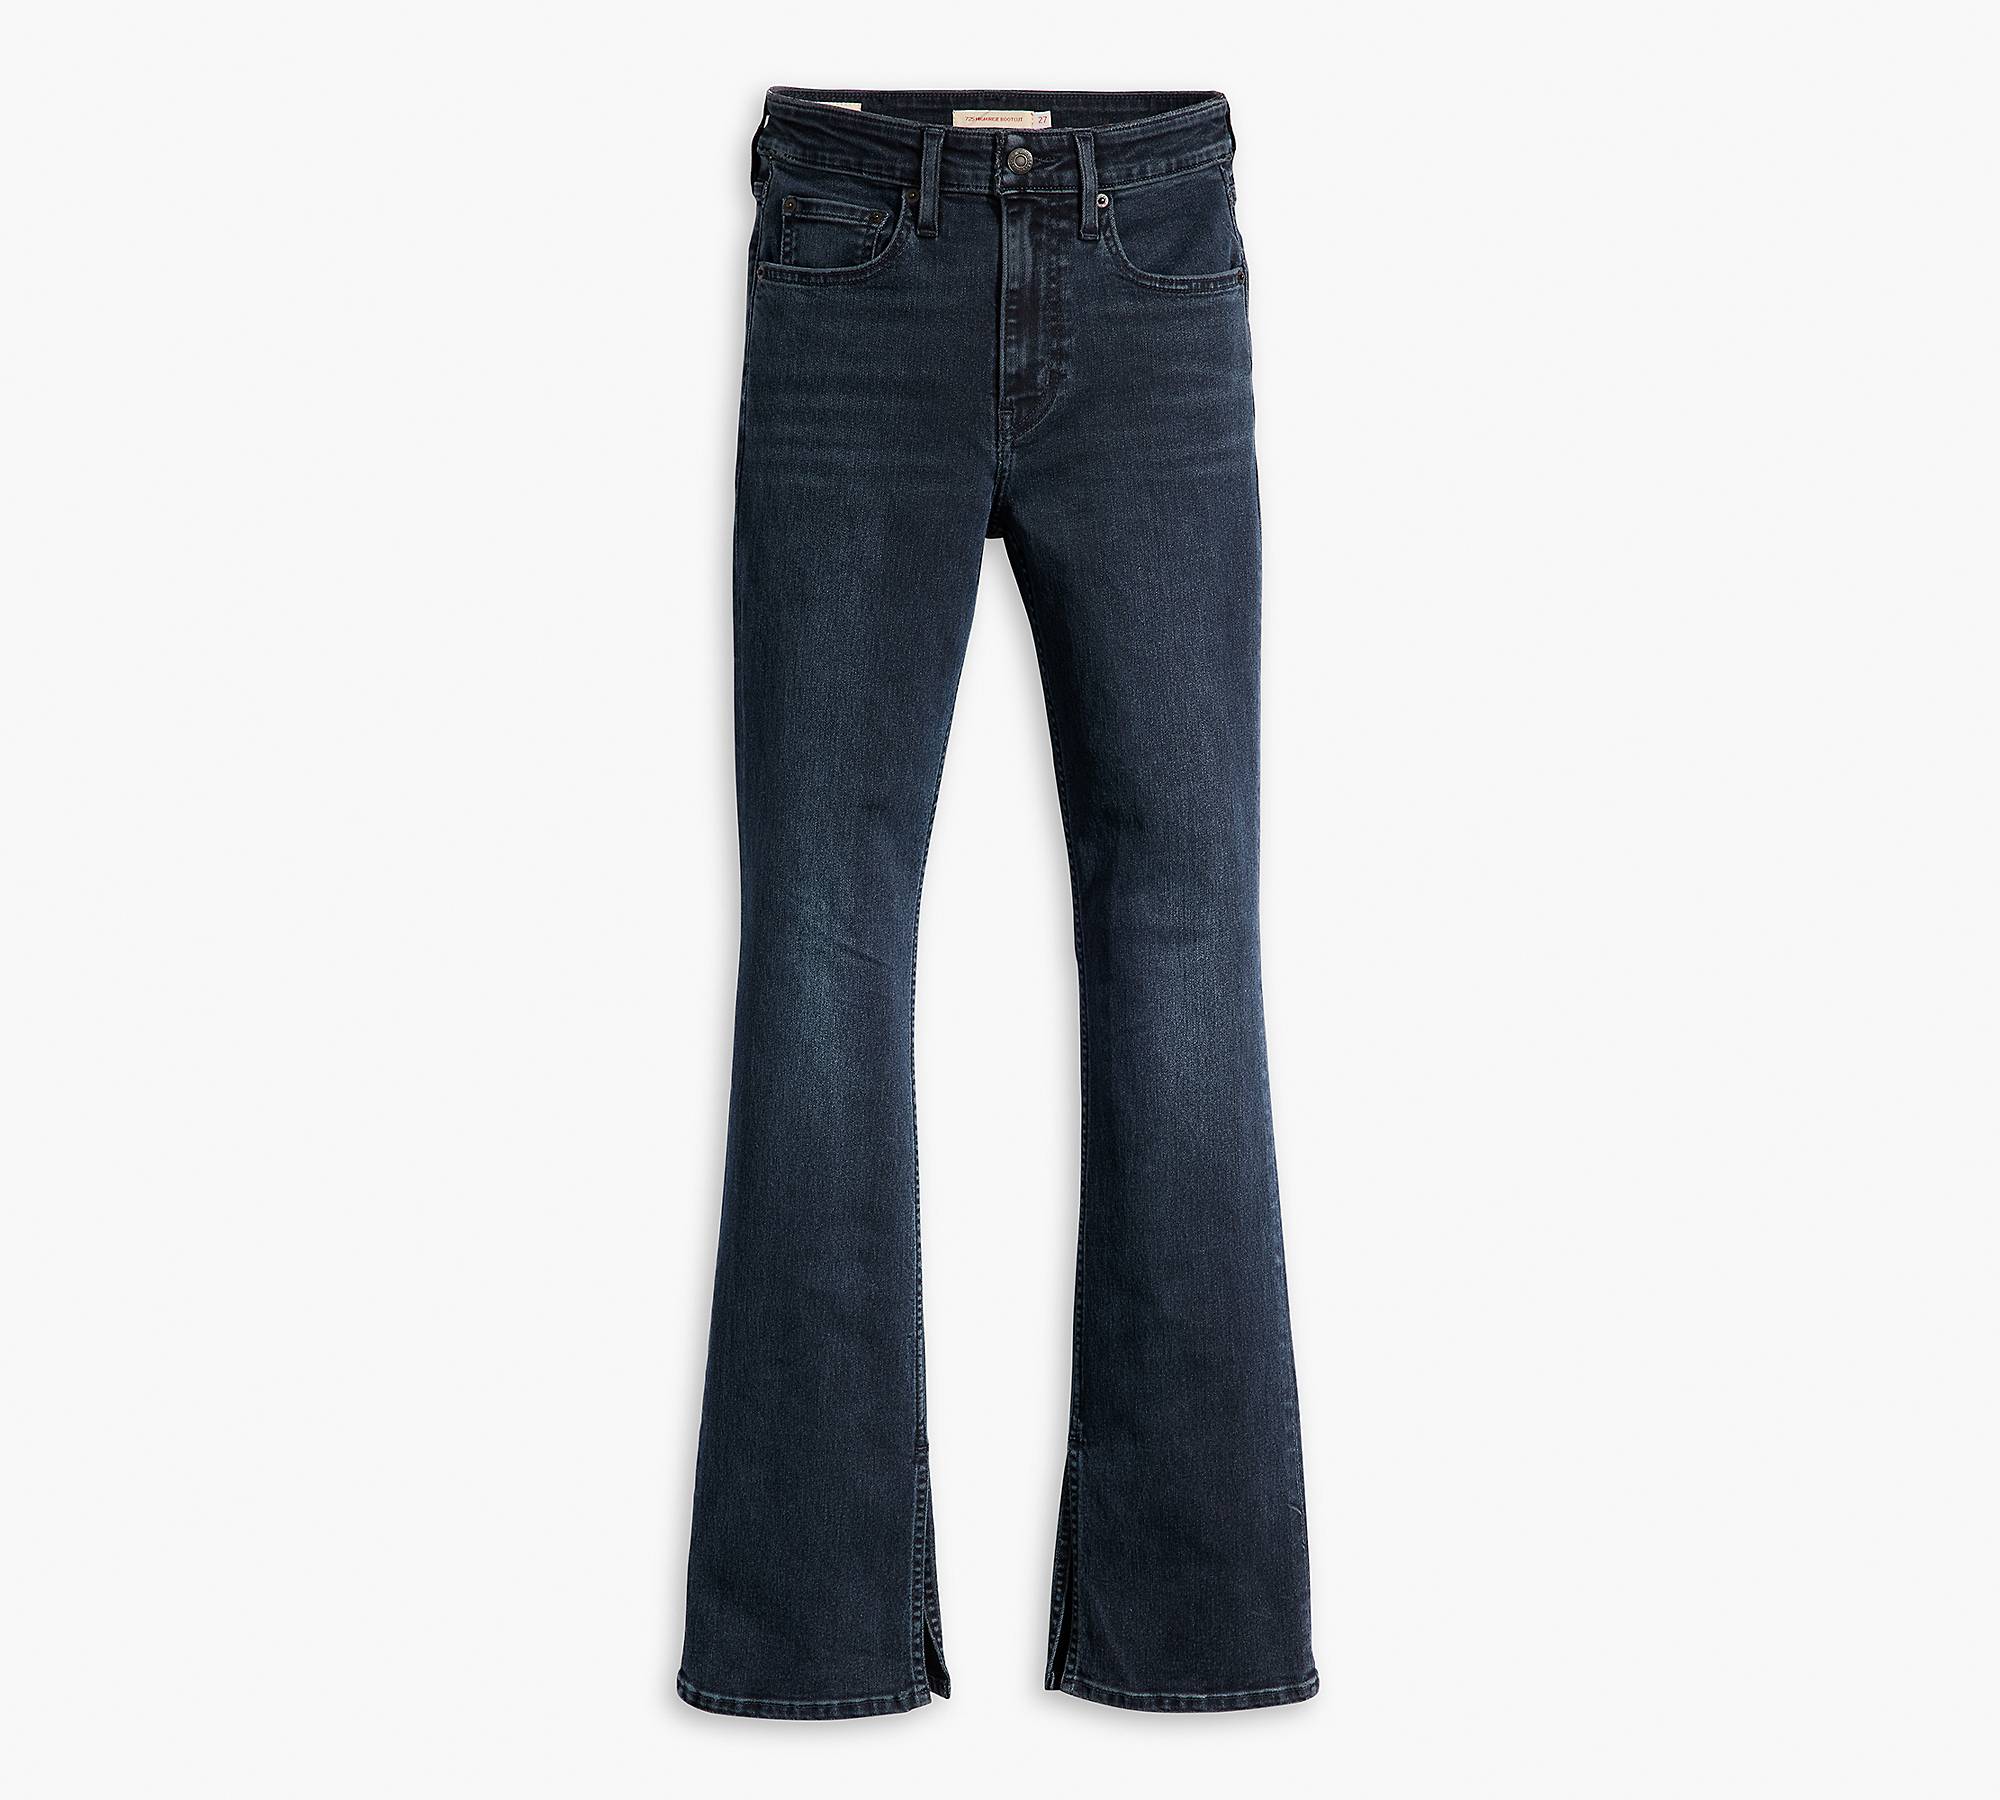 725 High Rise Bootcut Women's Jeans - Dark Wash